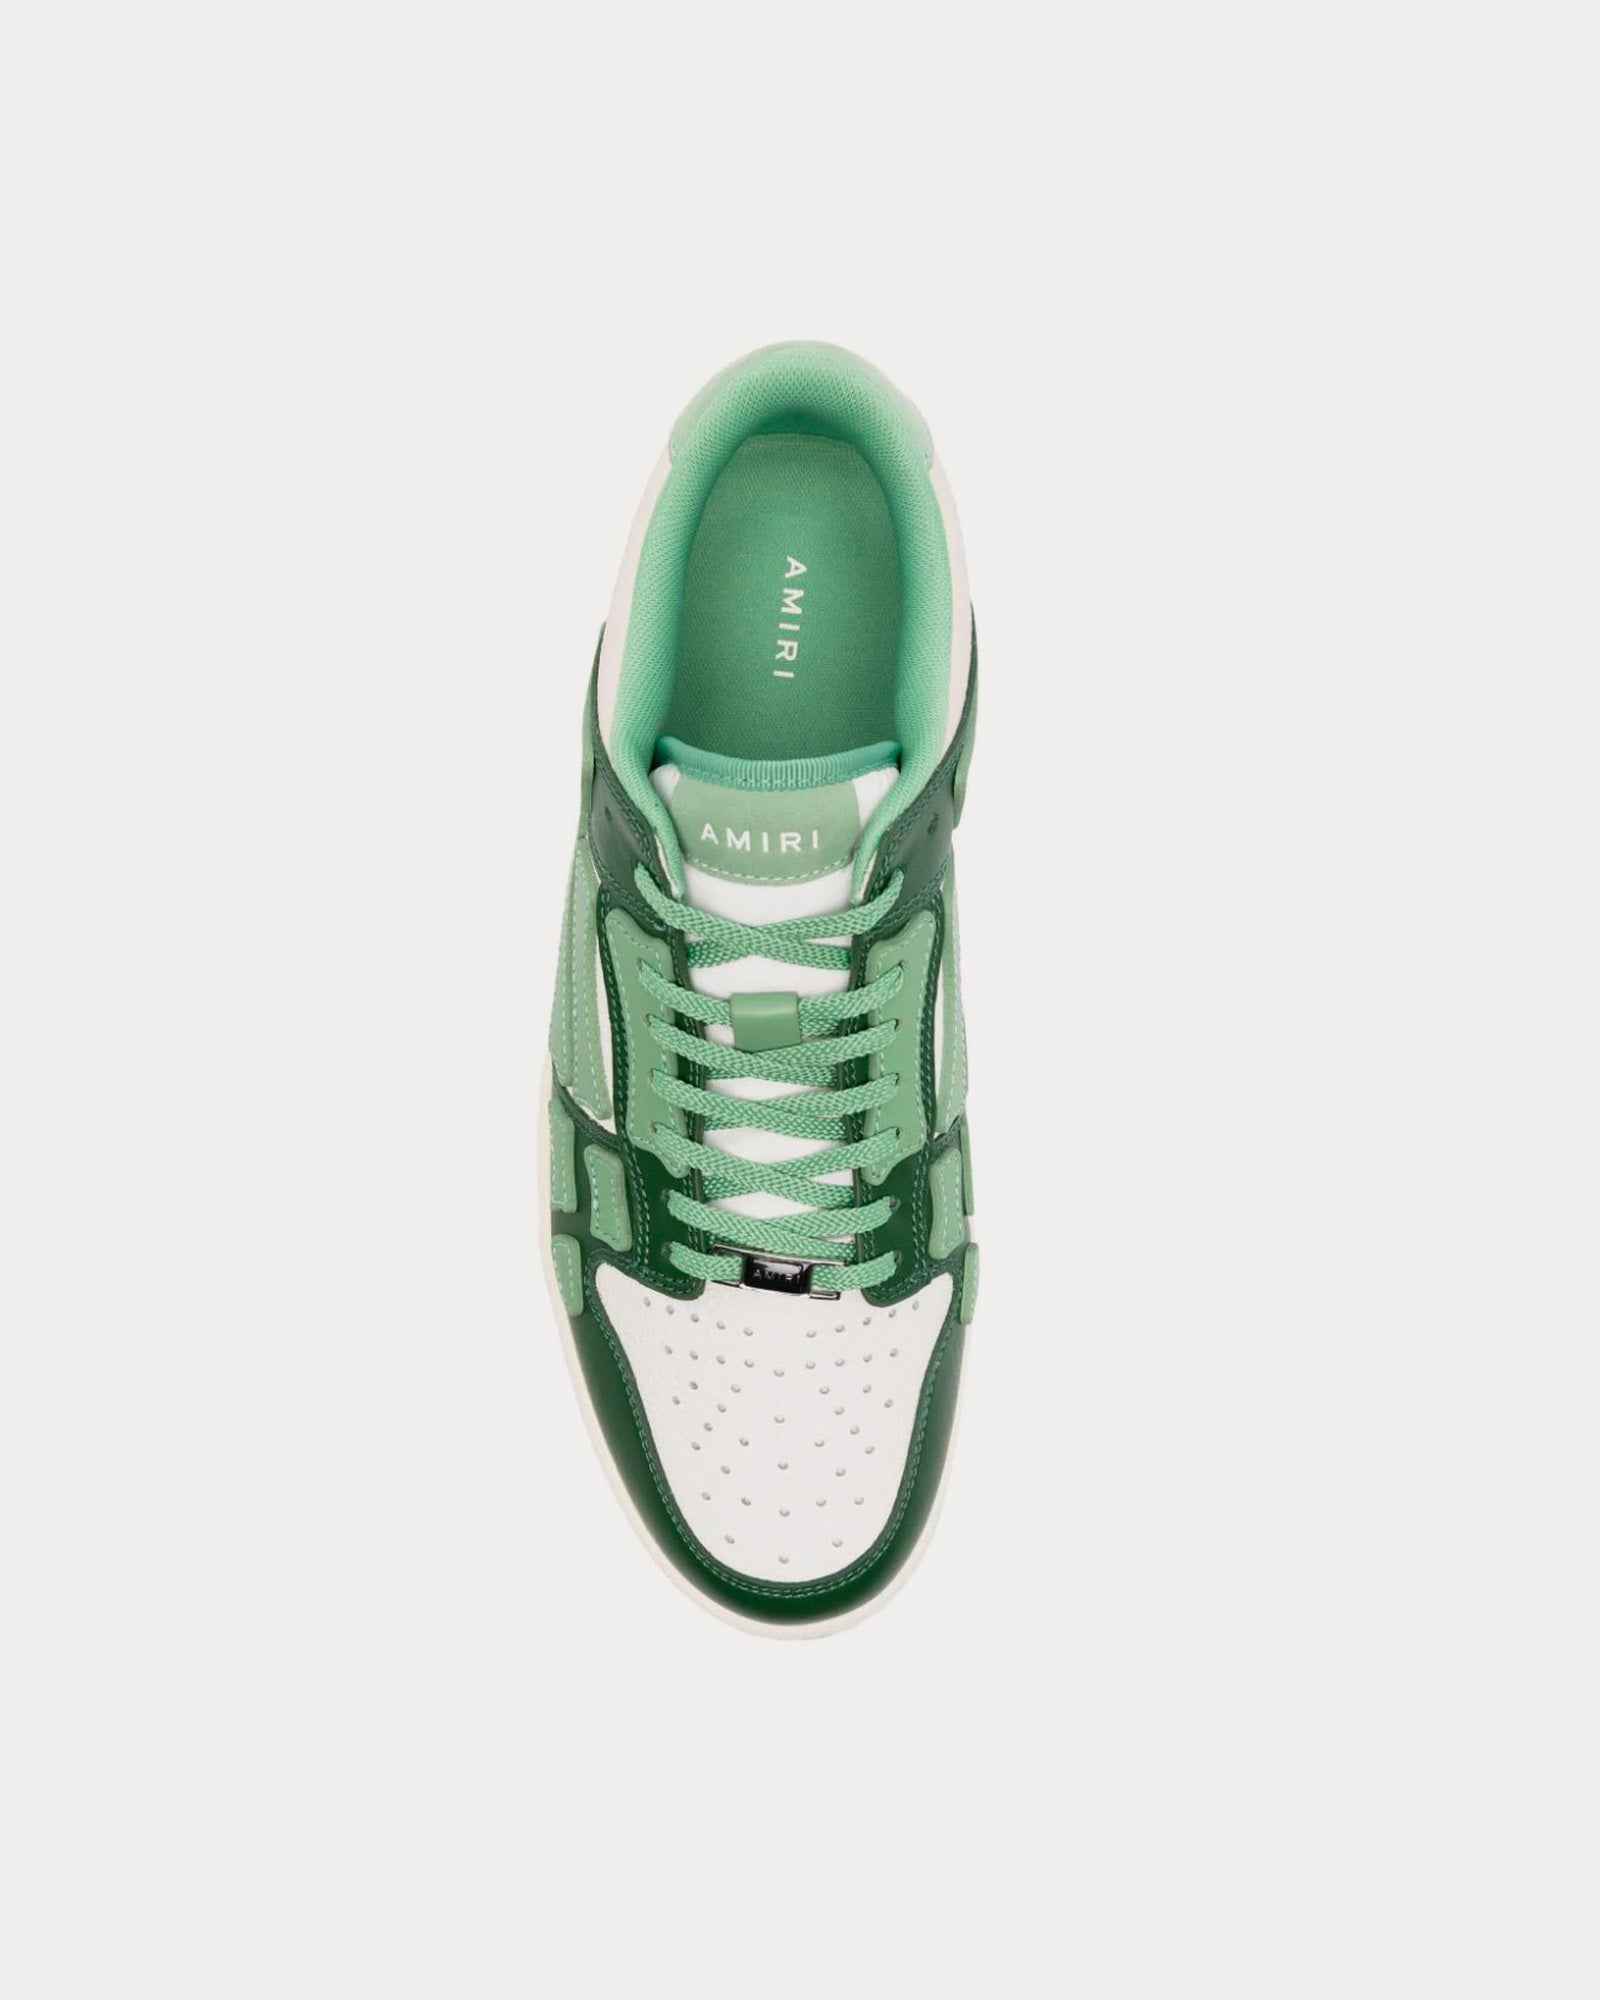 AMIRI - Skel-Top Leather White / Green Low Top Sneakers